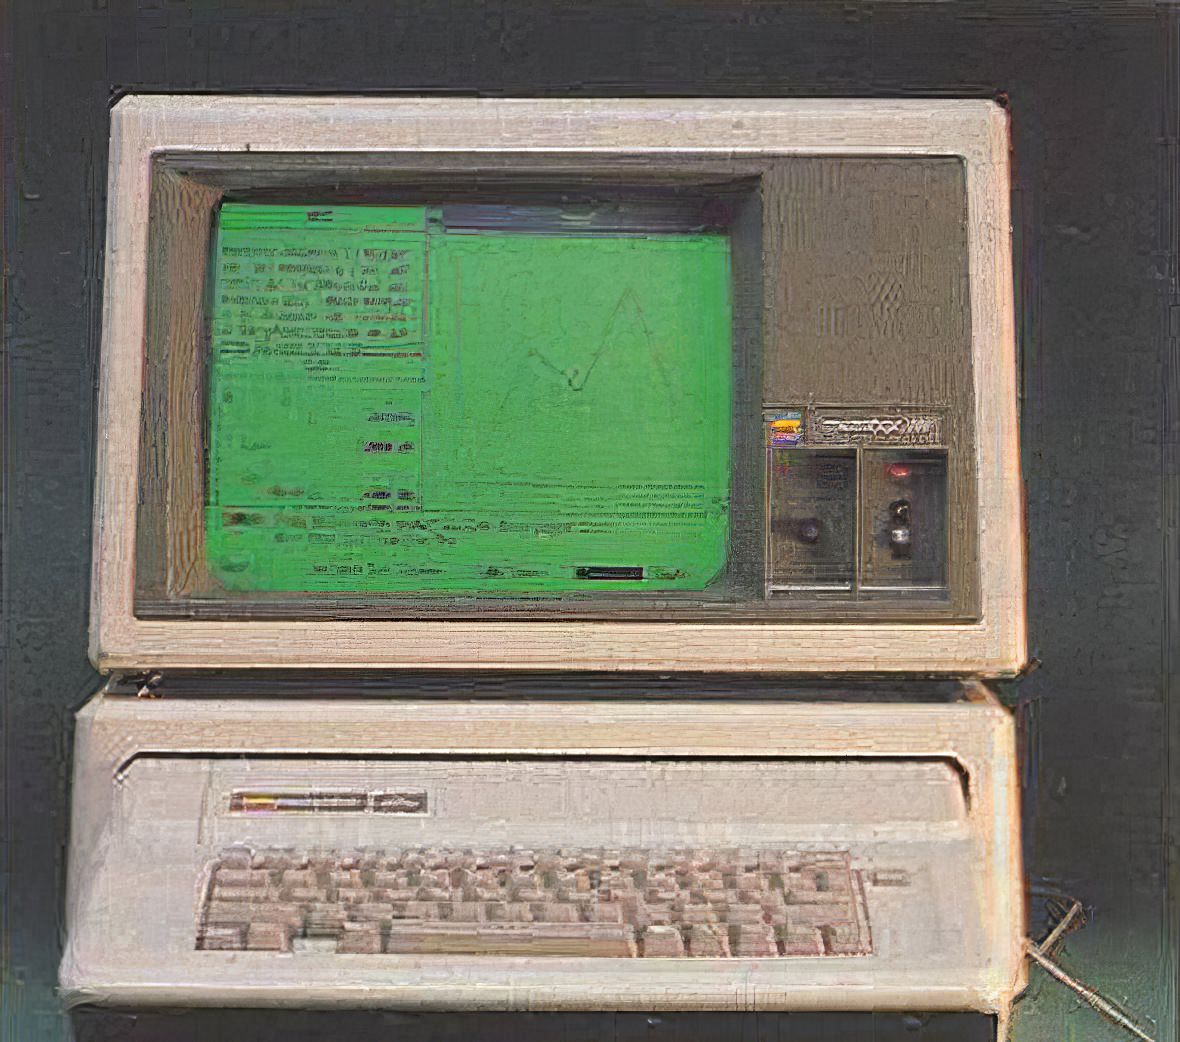 First ever apple computer running windows.